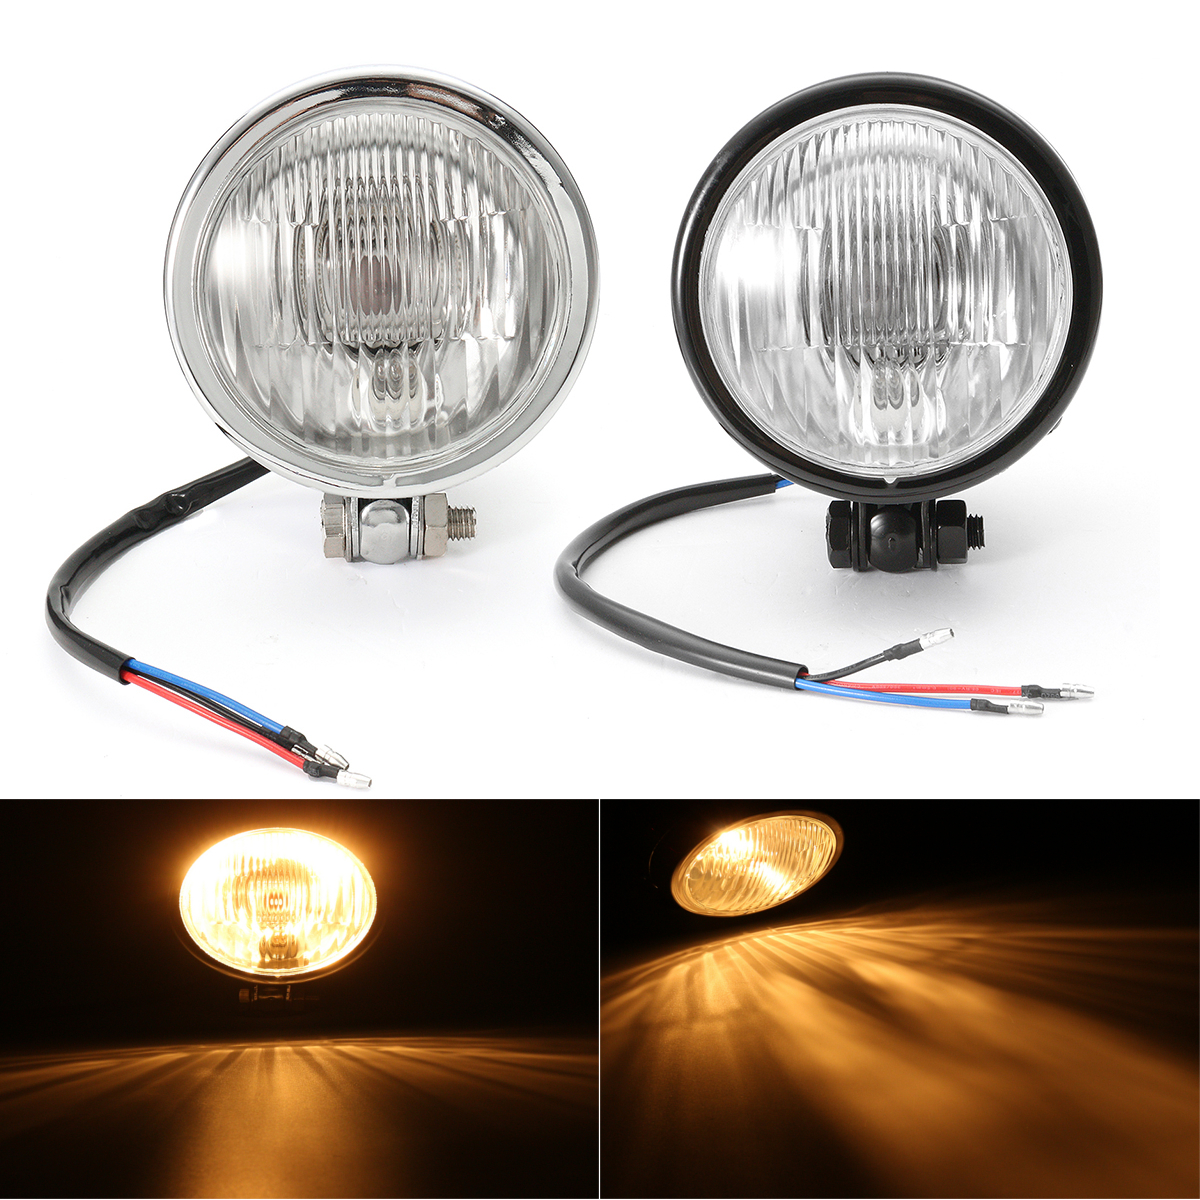 

12V 4inch Motorcycle H4 Round Headlight Light Lamp Bulb Hi/Lo Beam Universal